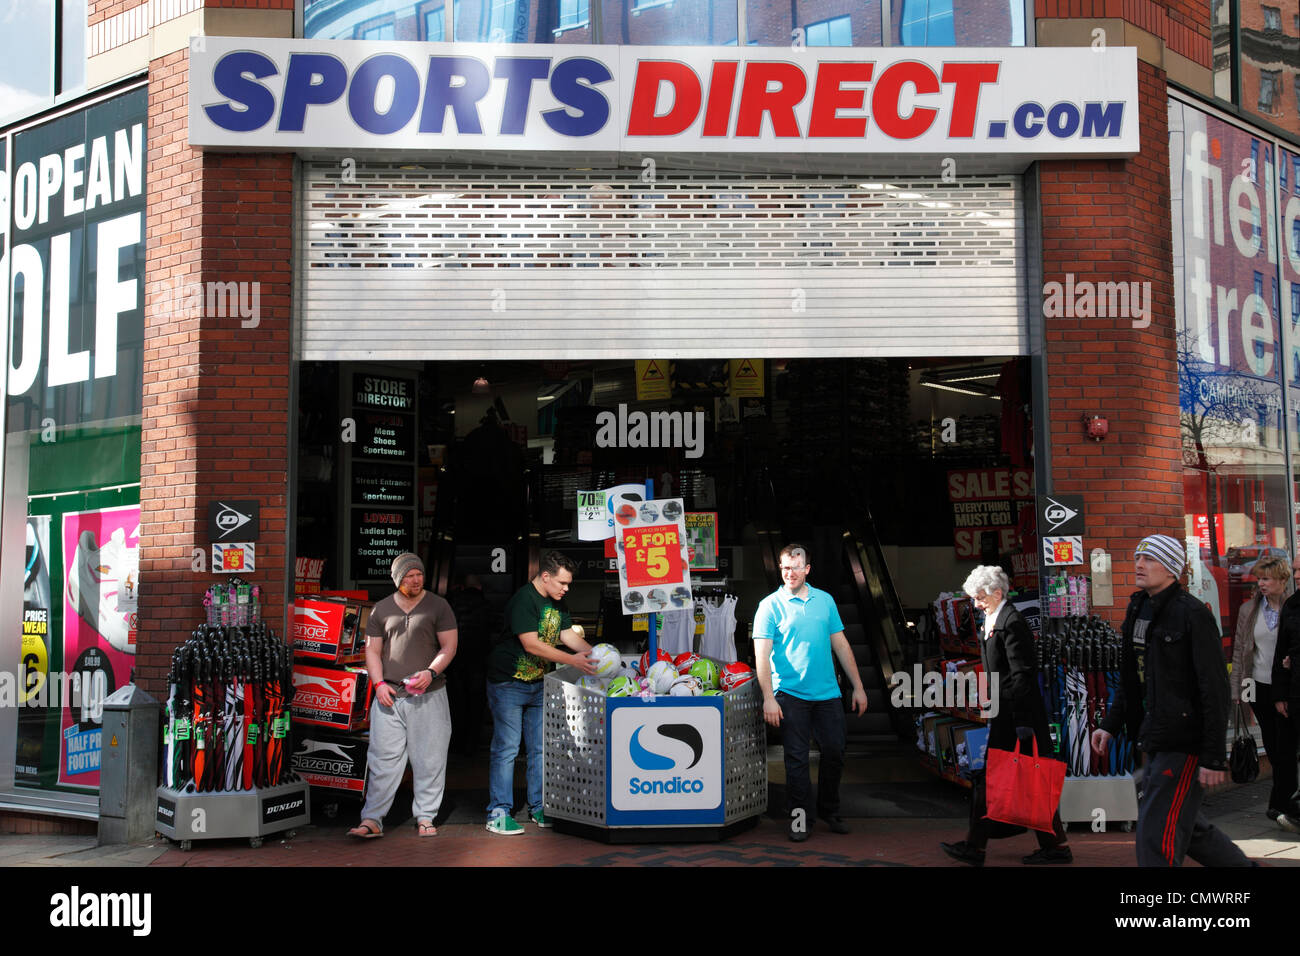 Sports Direct.com store interior, Borehamwood, England, UK Stock